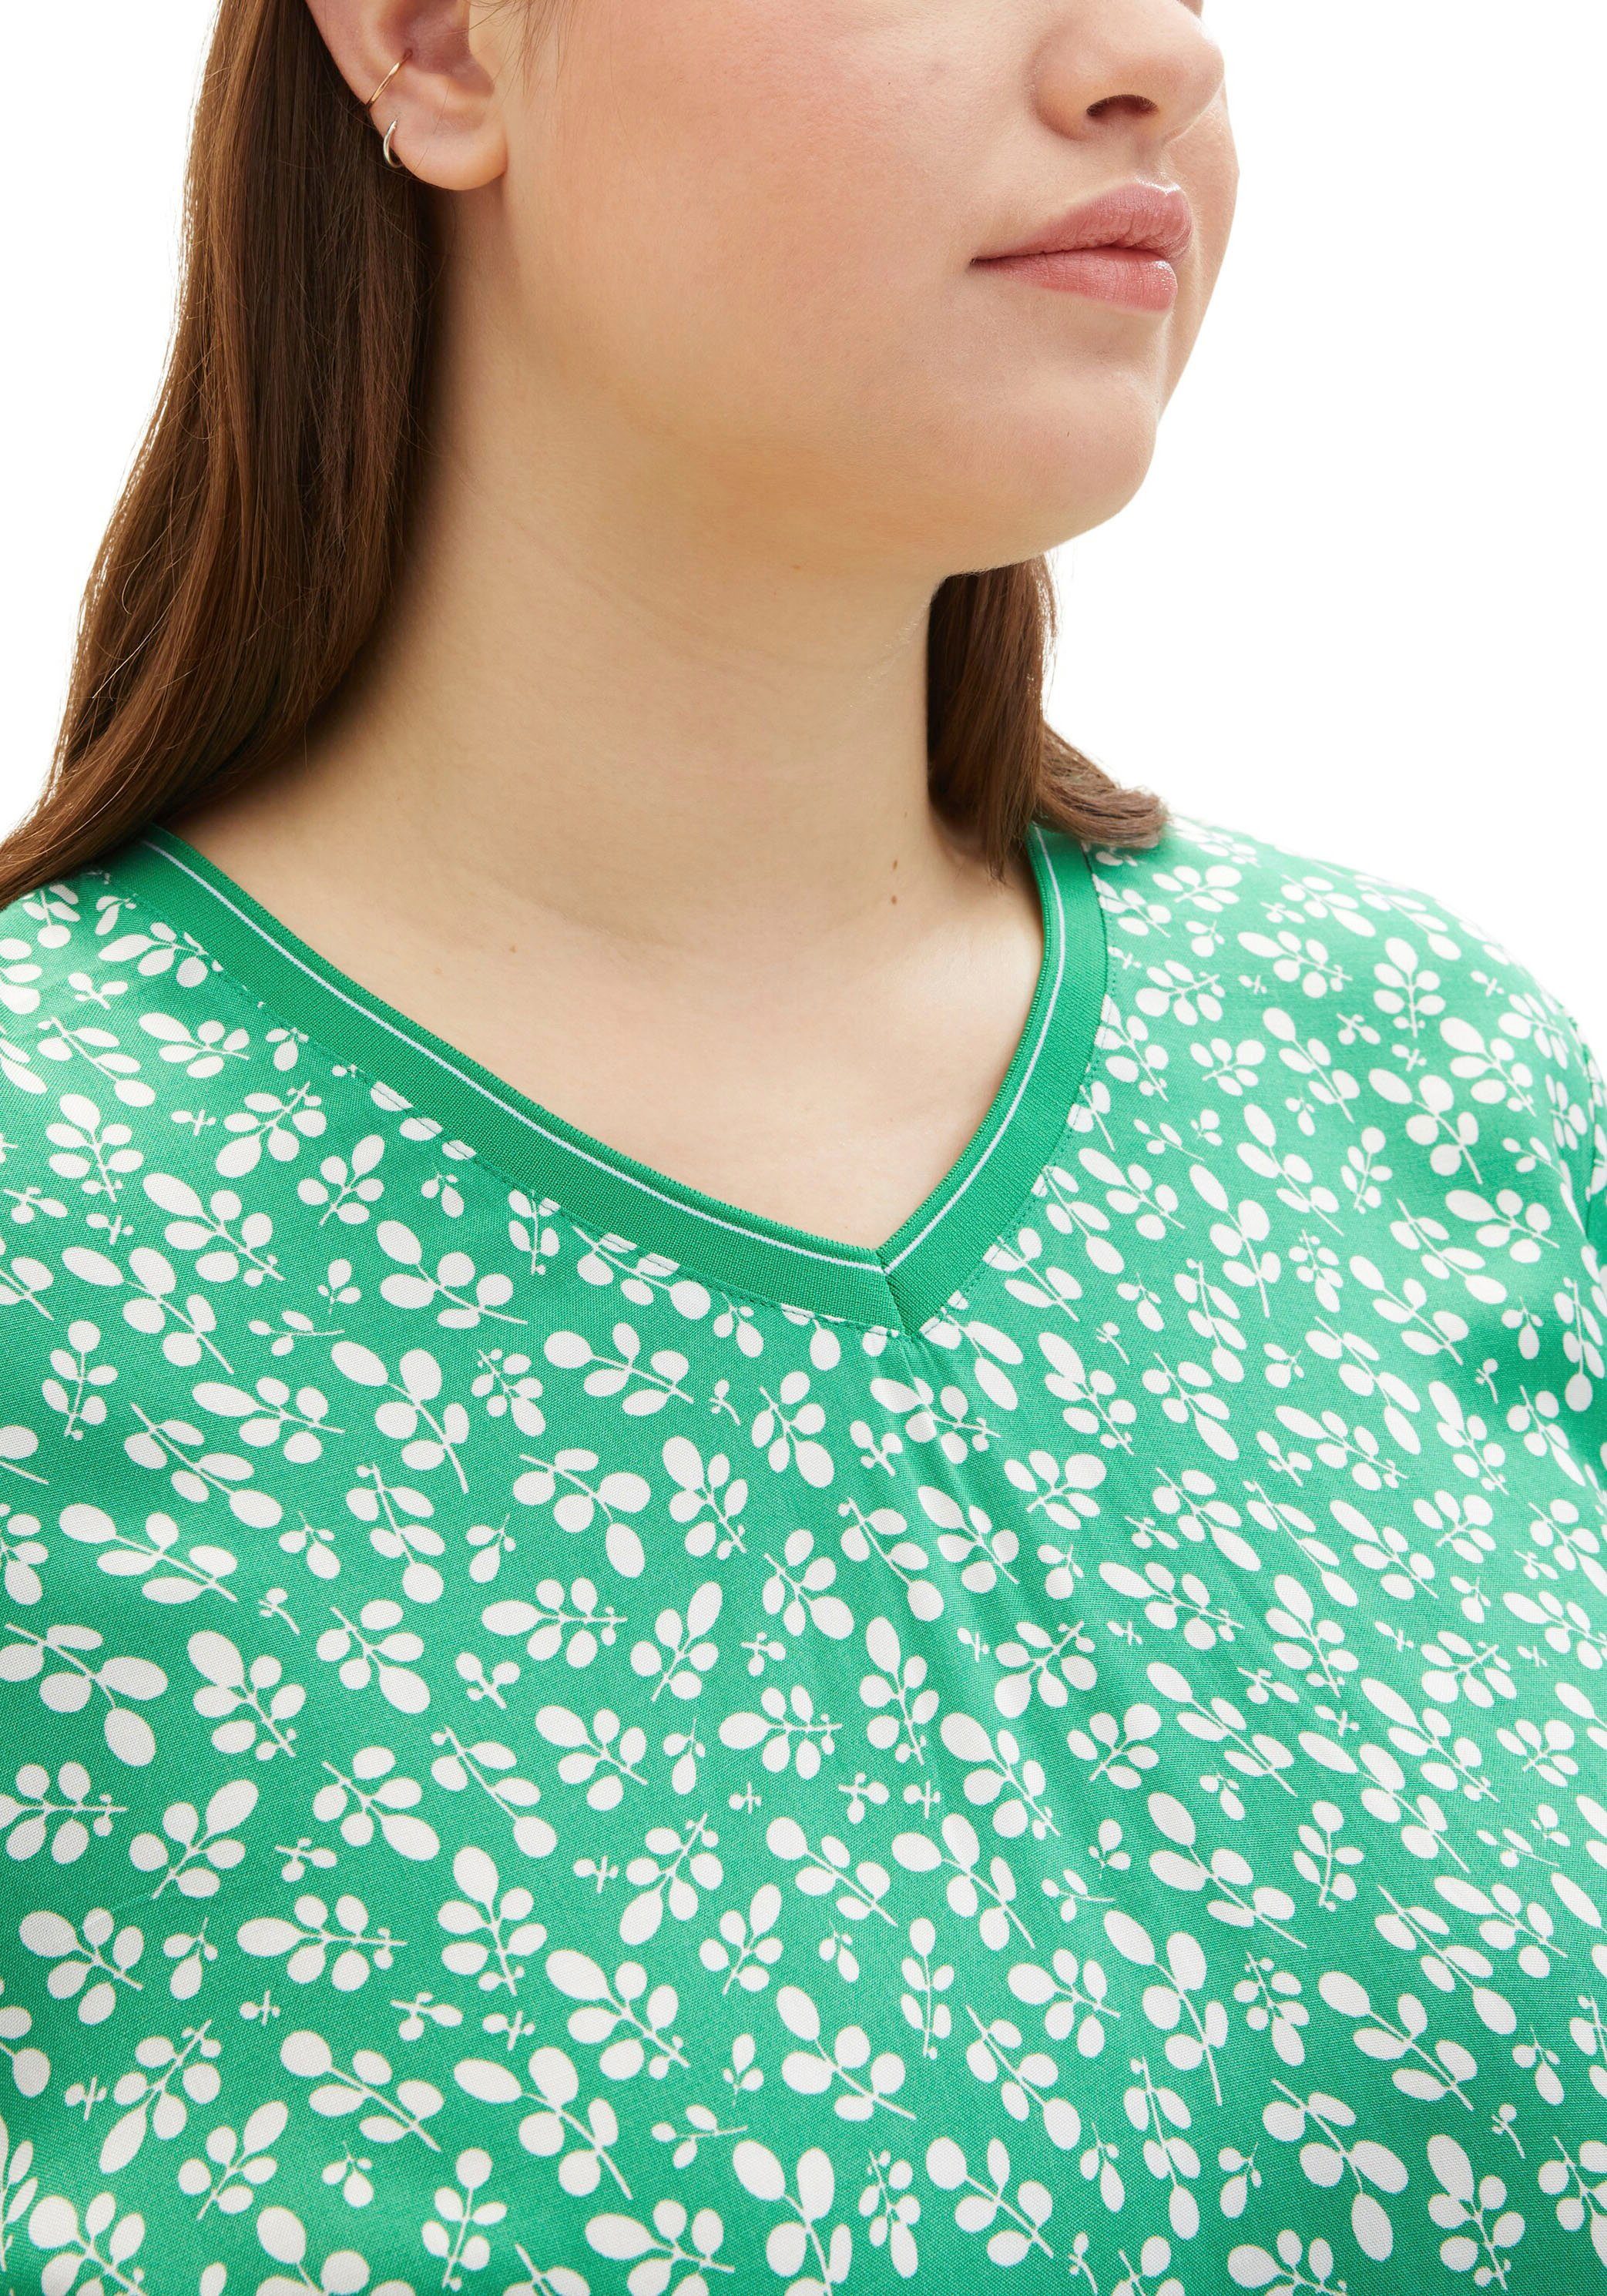 TOM TAILOR PLUS 3/4-Arm-Shirt mit weiß geblümt Muster floralem grün